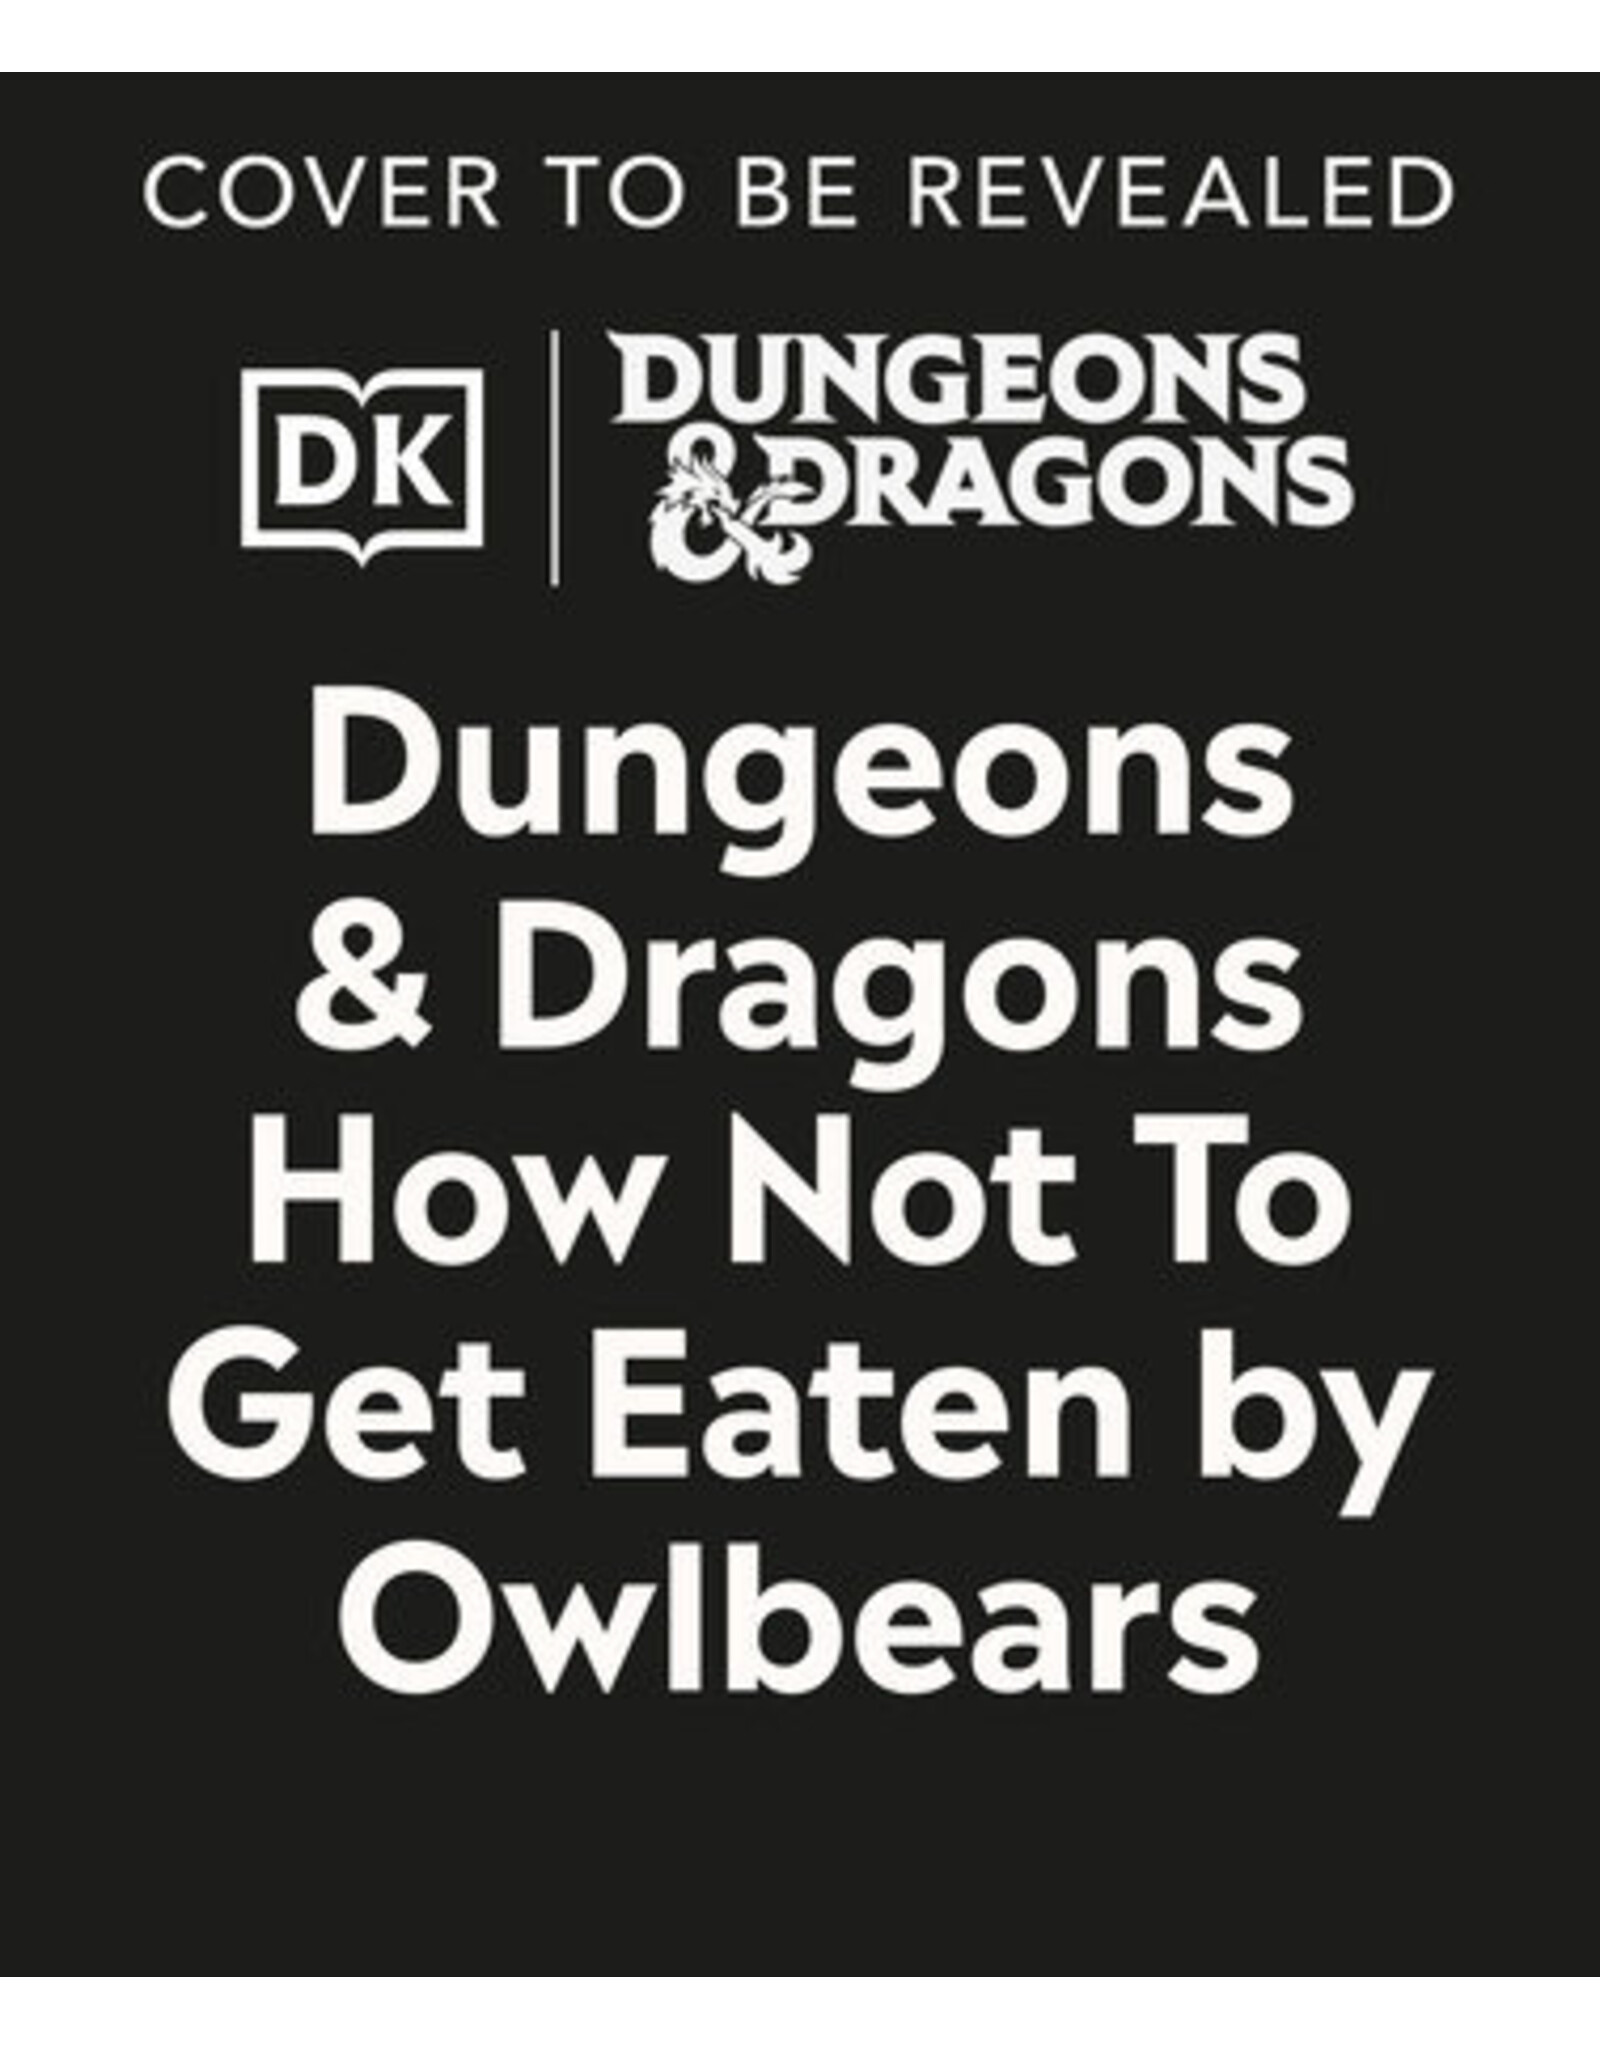 Random House D&D: How Not to Get Eaten by Owlbears (Pre Order)